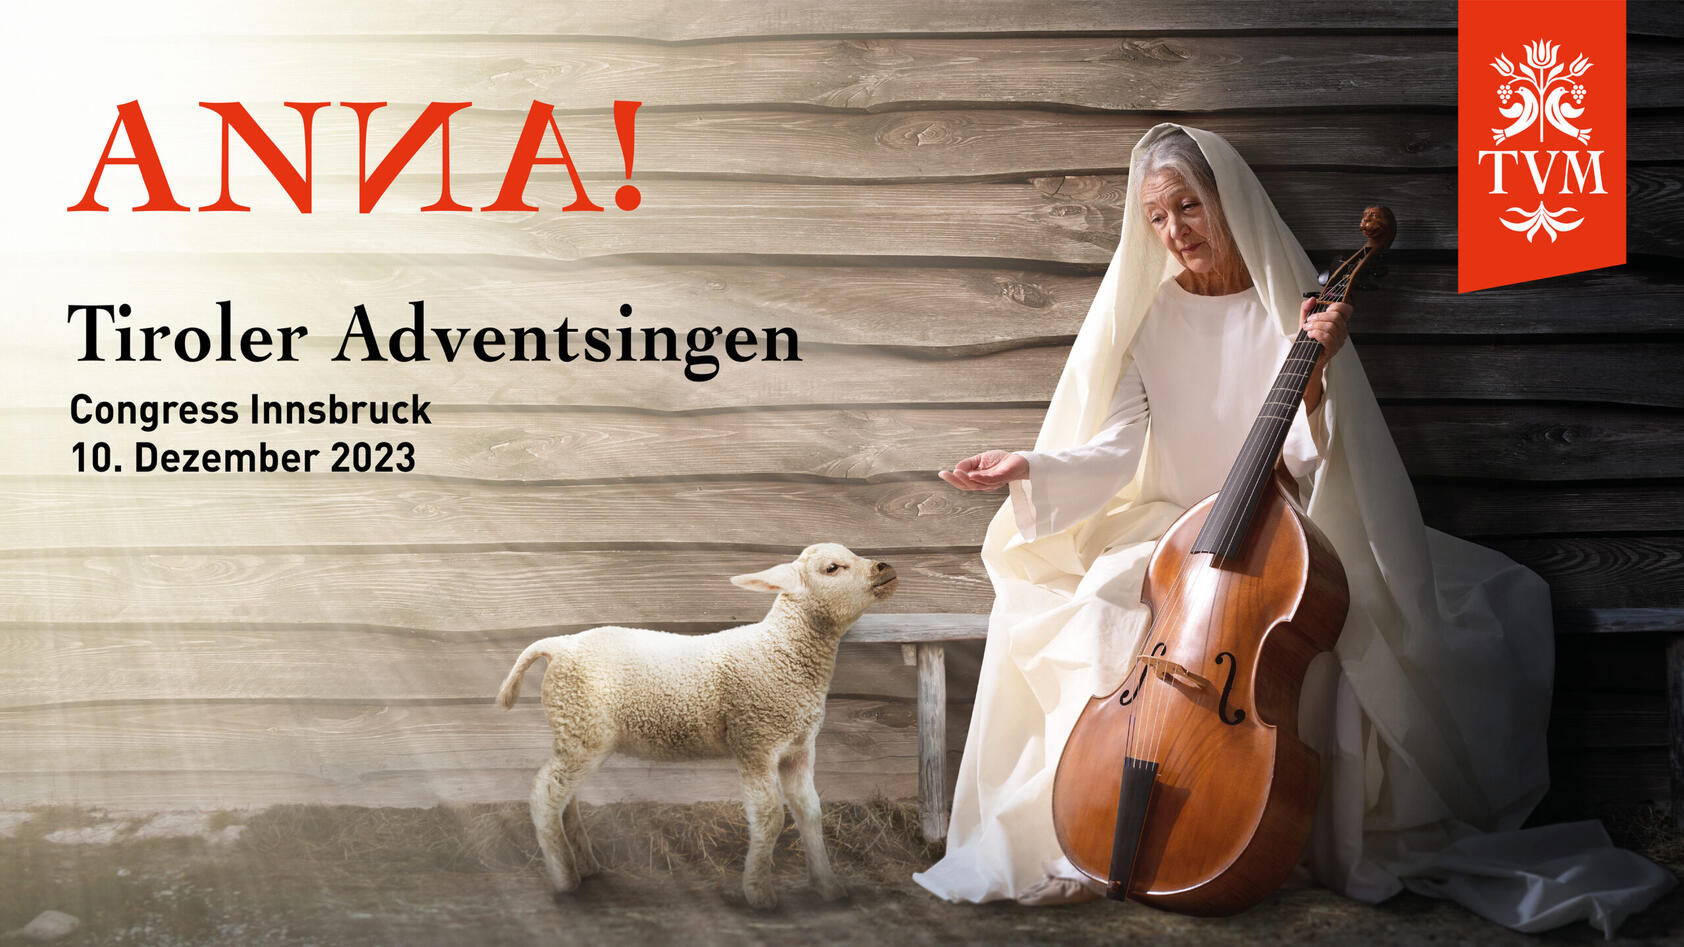 Tiroler Adventsingen "Anna!"